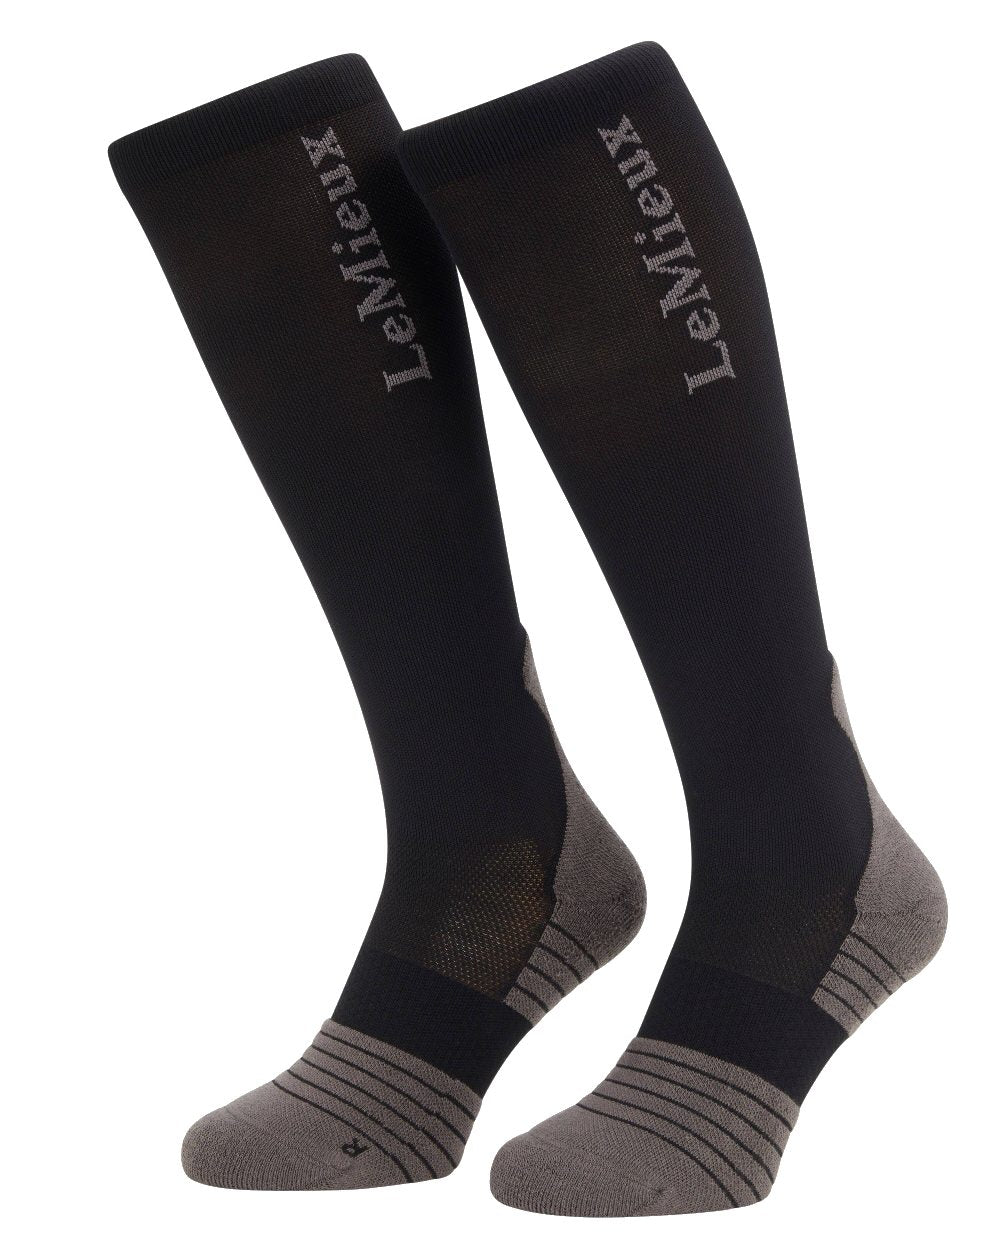 Black coloured LeMieux Performance Socks on white background 